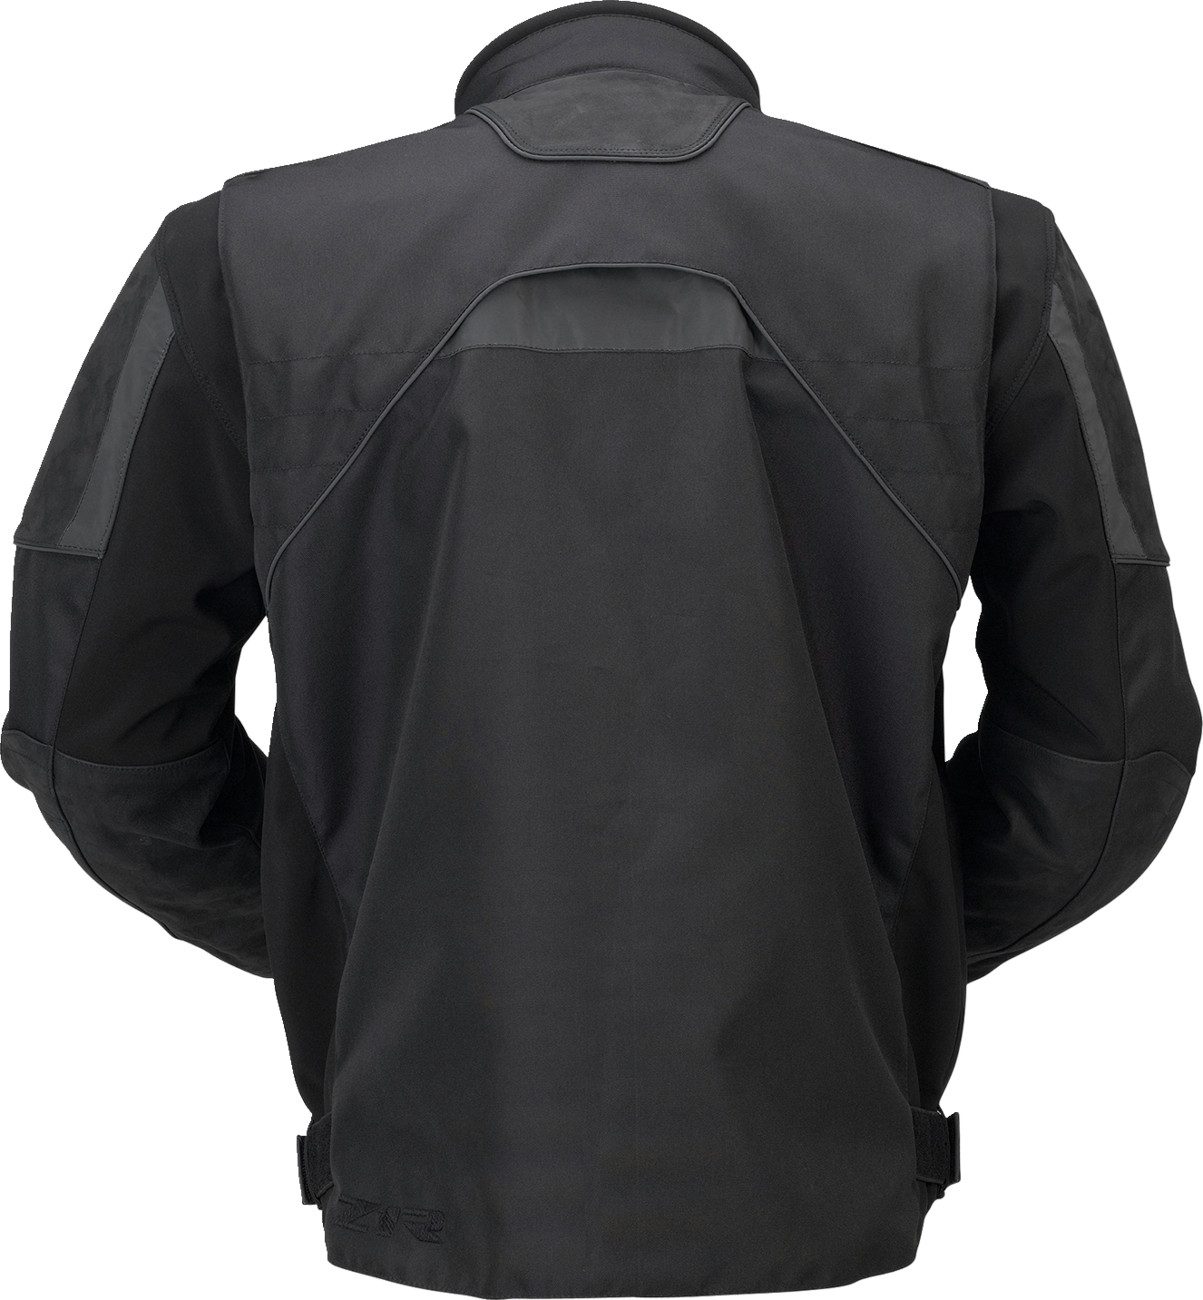 Z1R Reverance Jacket - Black - Small 2820-5783